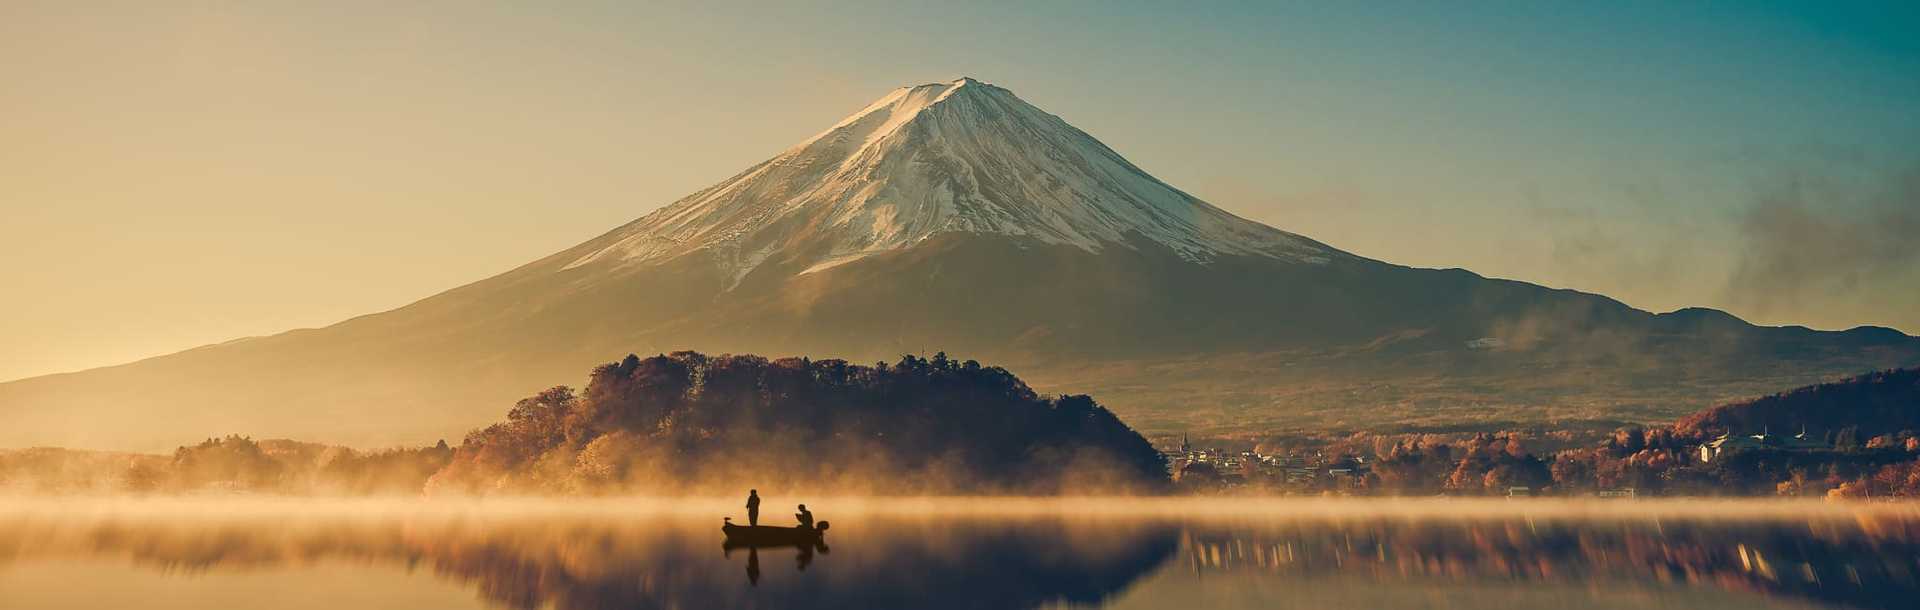 Japan Mount Fuji over Lake Kawaguchiko